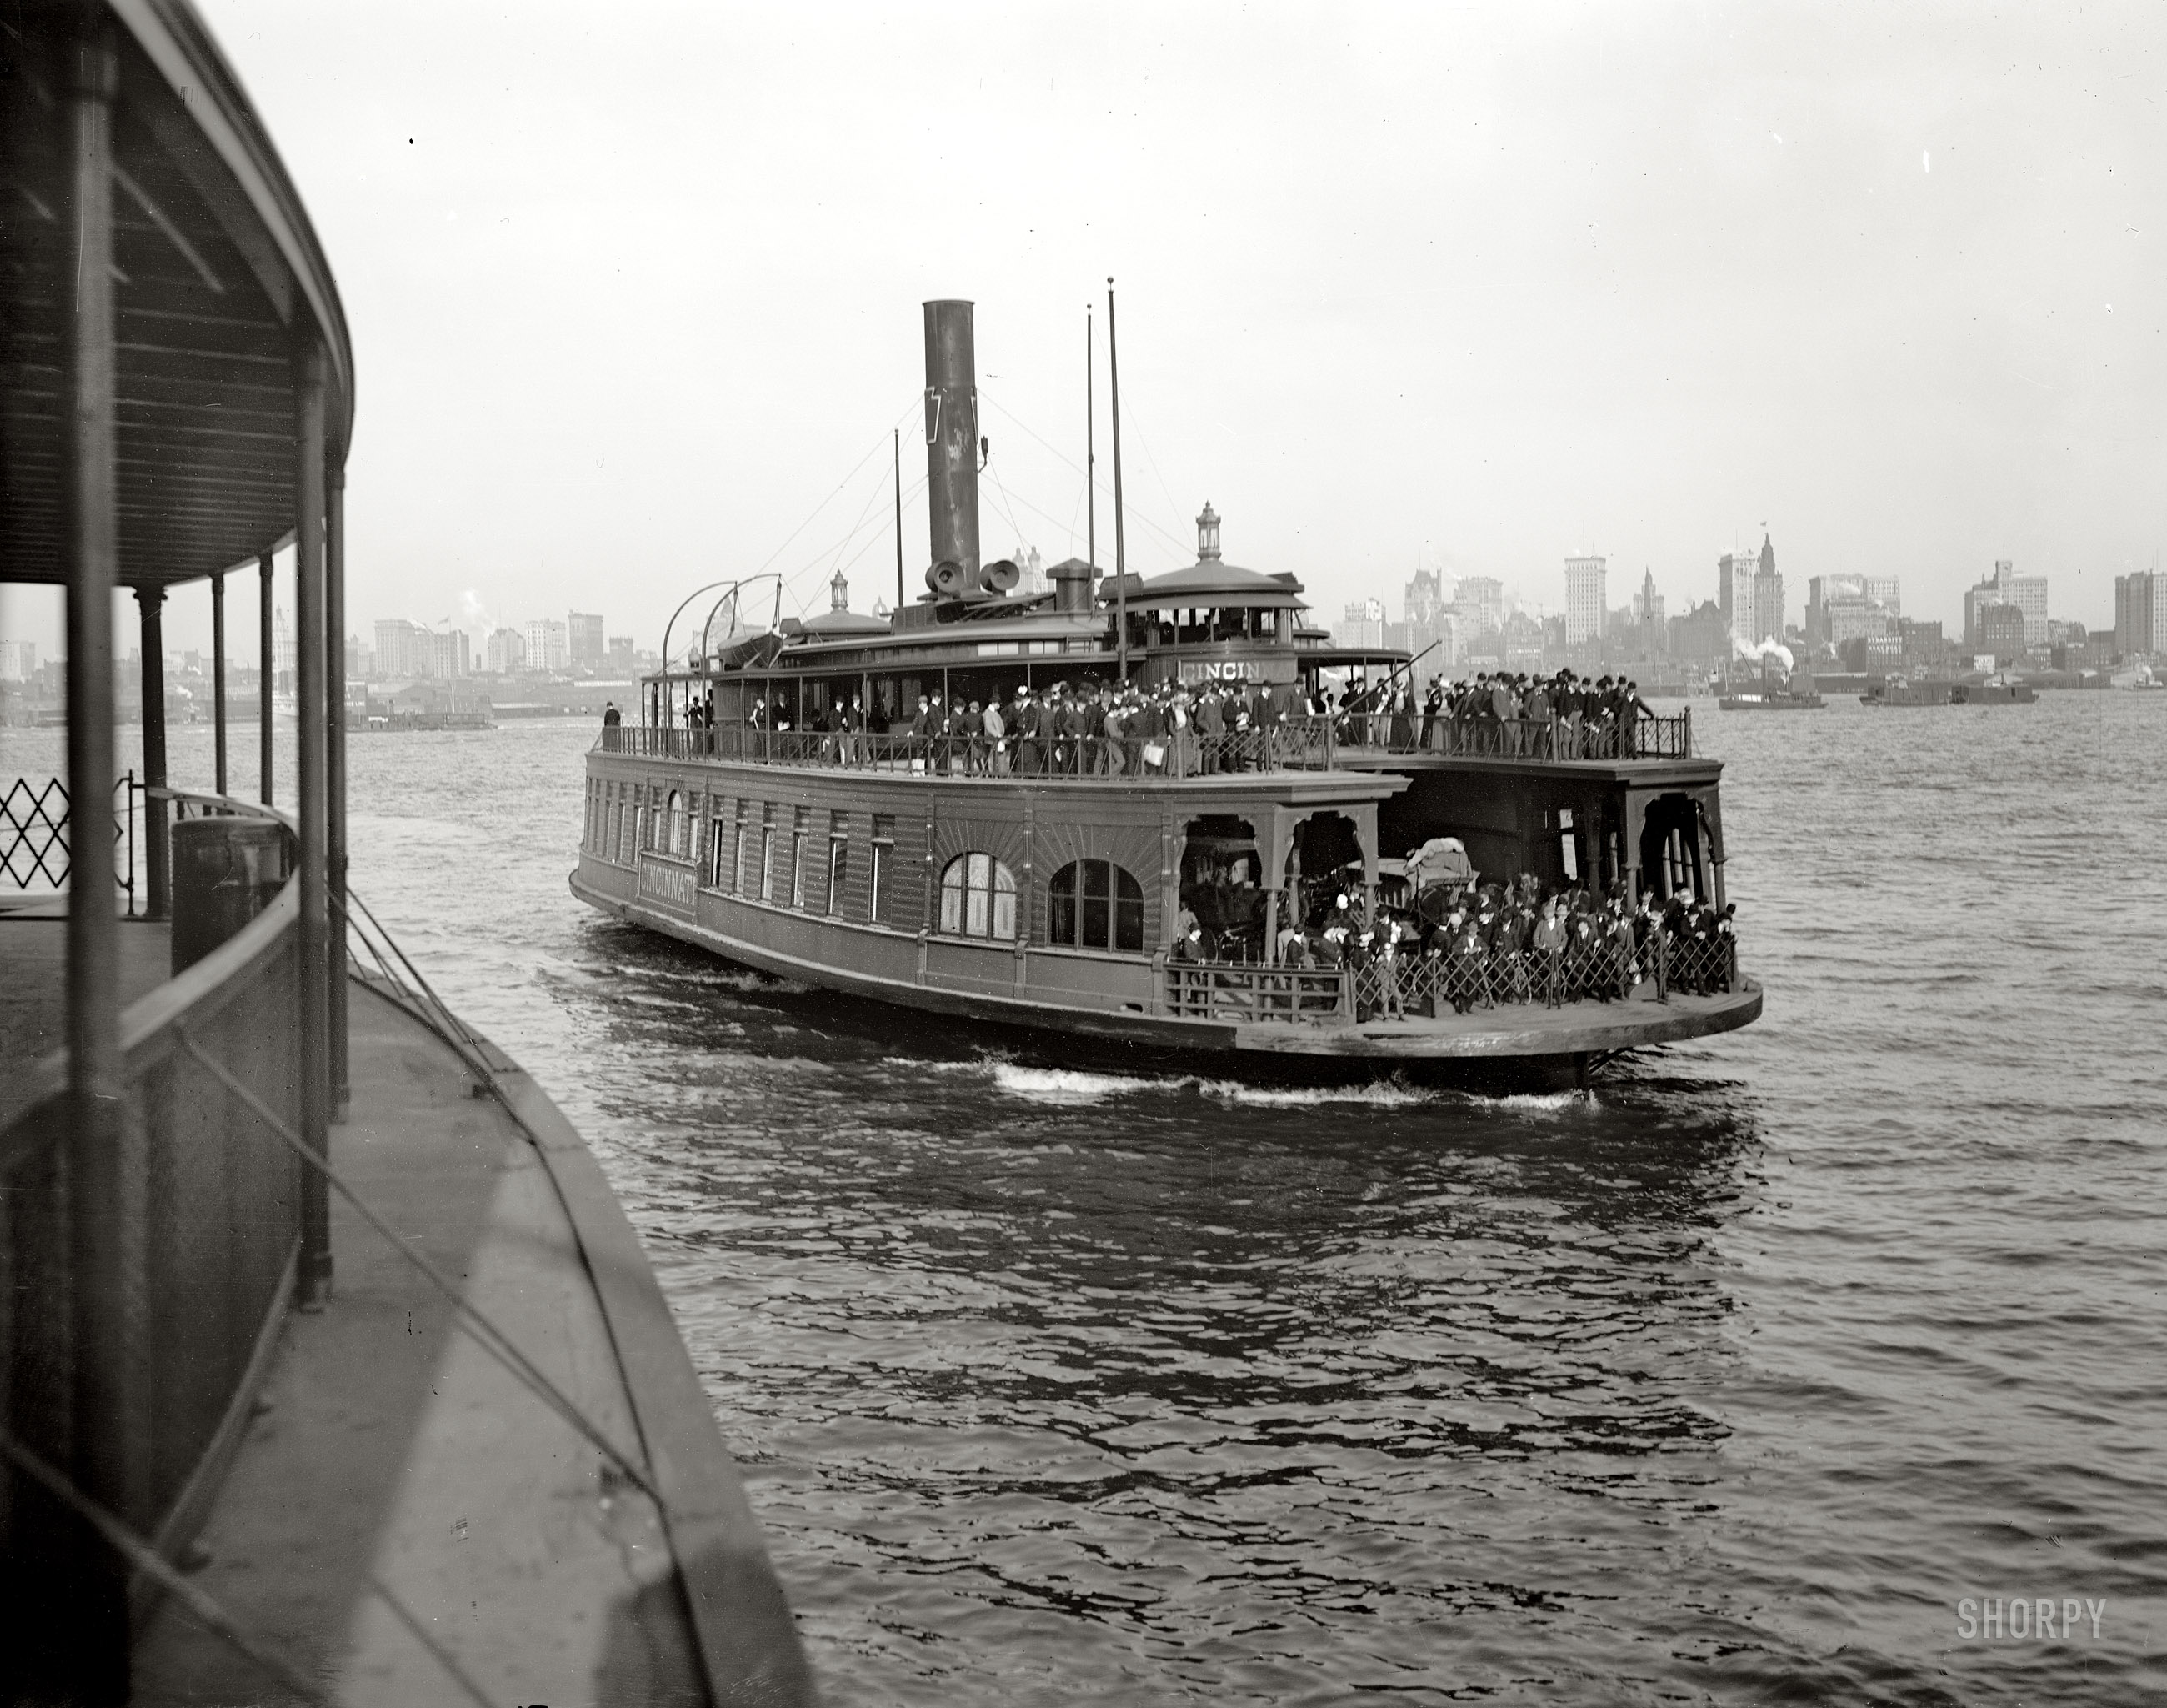 Circa 1900. "A ferry boat, New York." The steamer Cincinnati off Manhattan. 8x10 inch dry plate glass negative, Detroit Publishing Co. View full size.